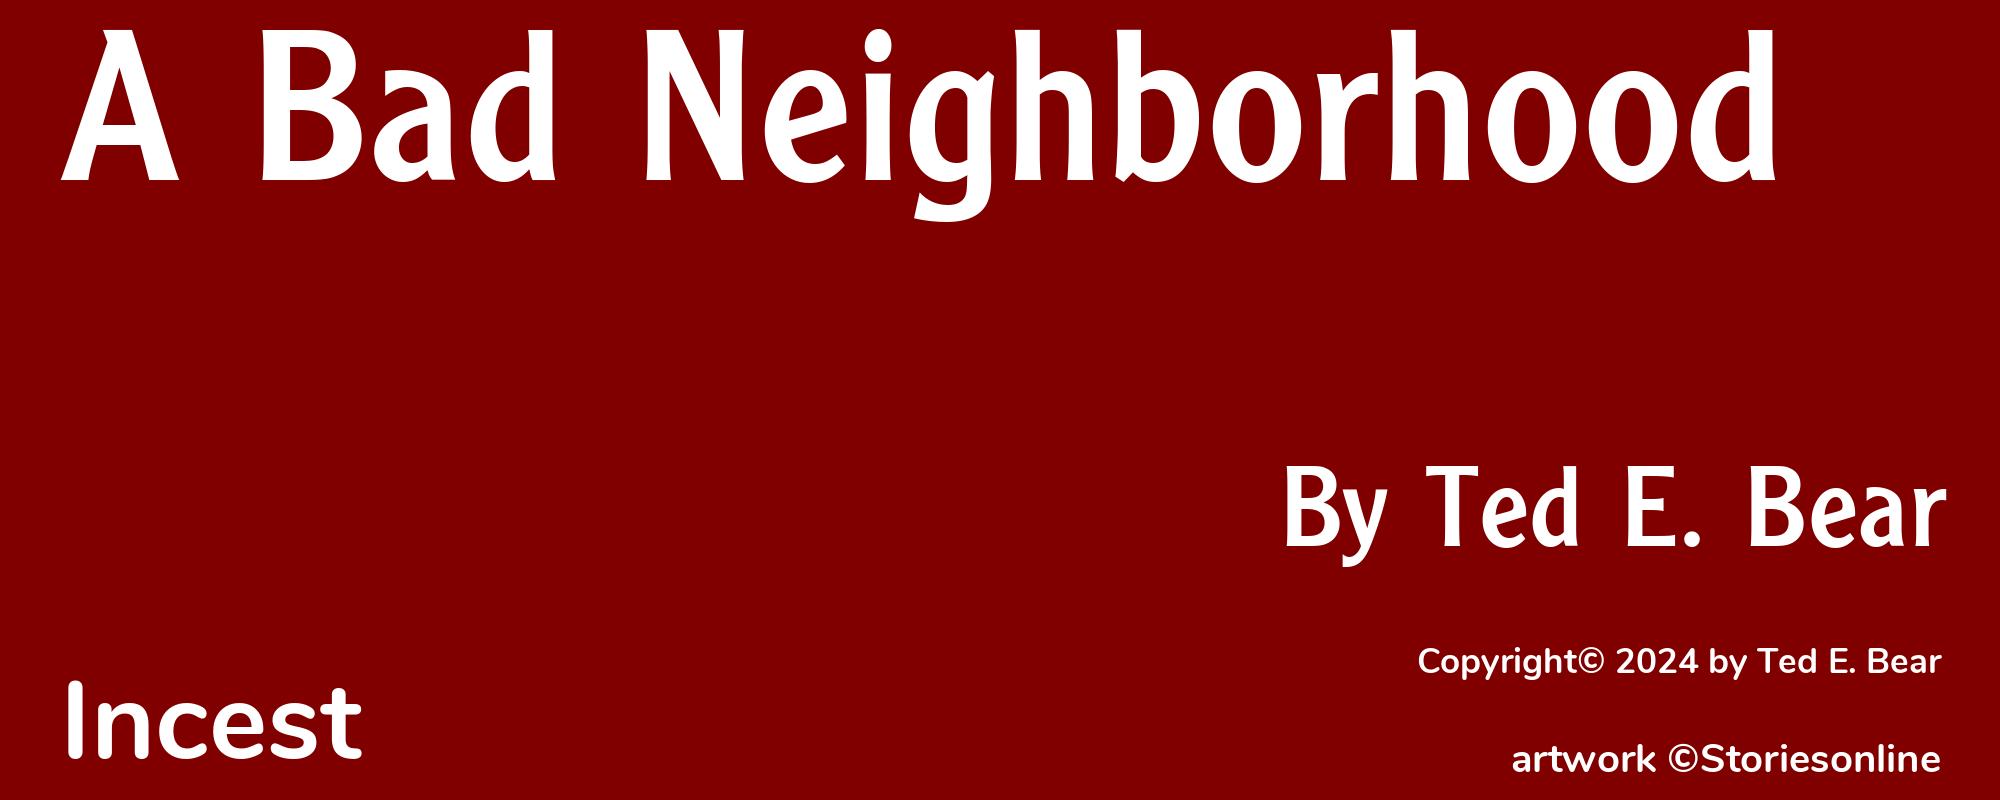 A Bad Neighborhood - Cover